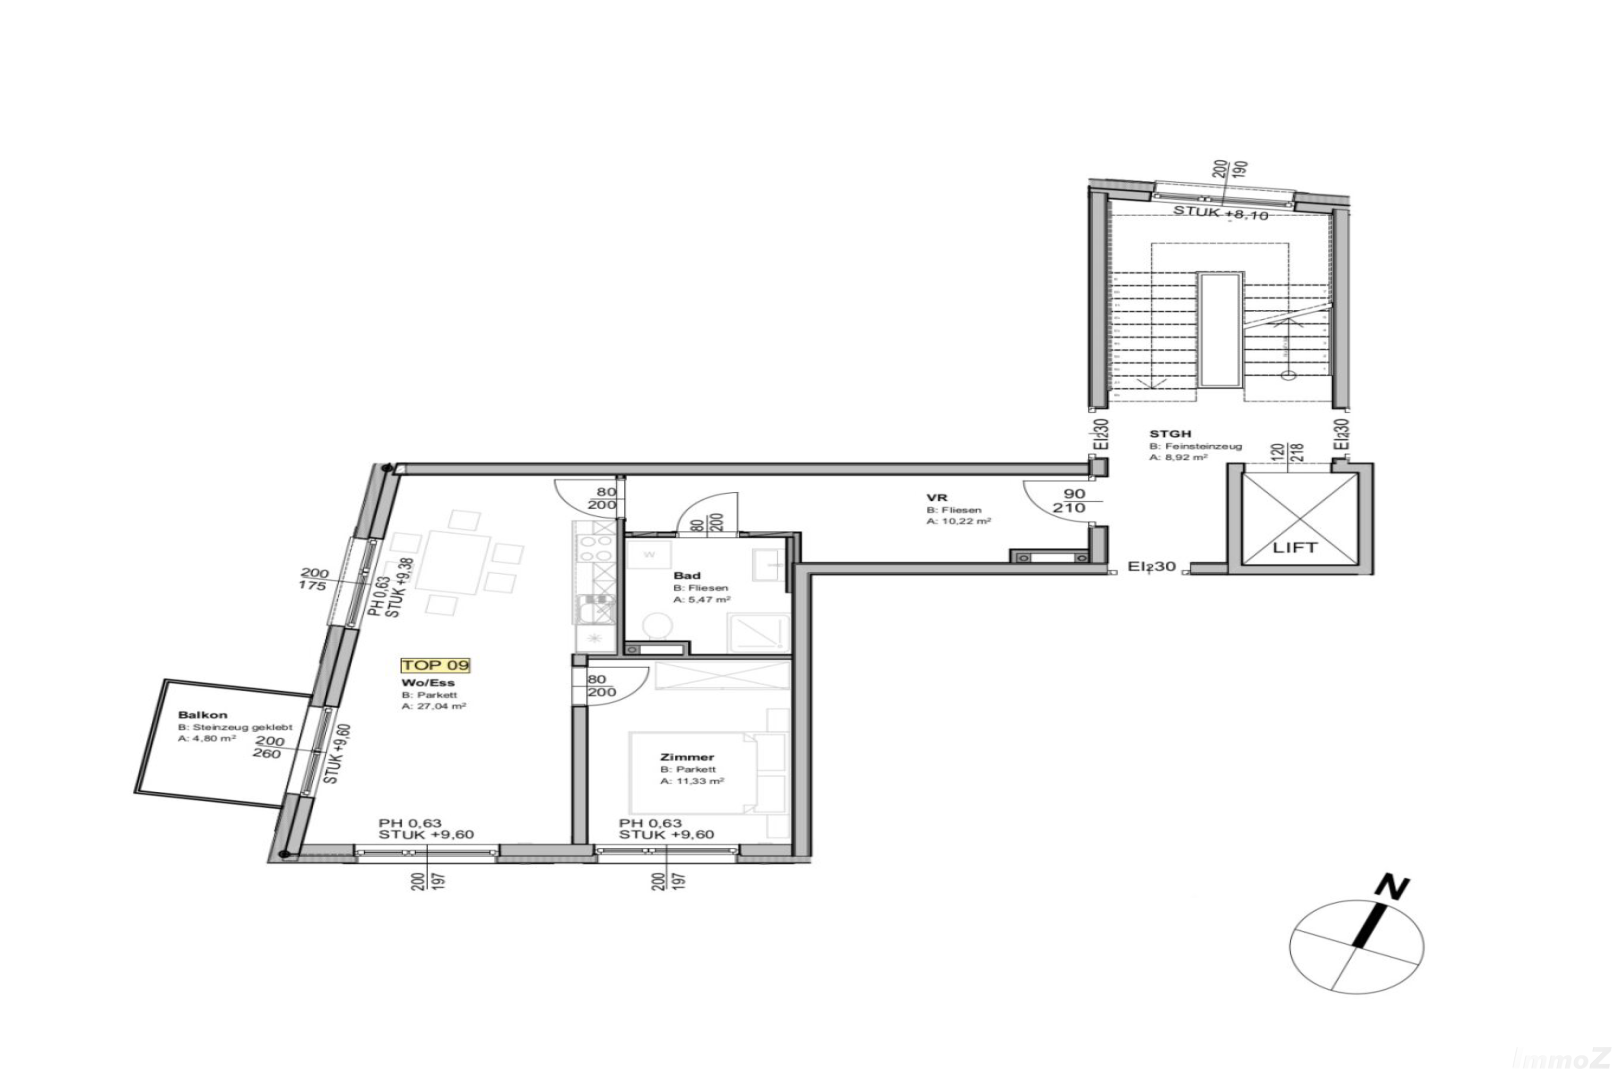 Wohnung zum Mieten: Keplerstraße 76, 8020 Graz - Grundriss Top 9